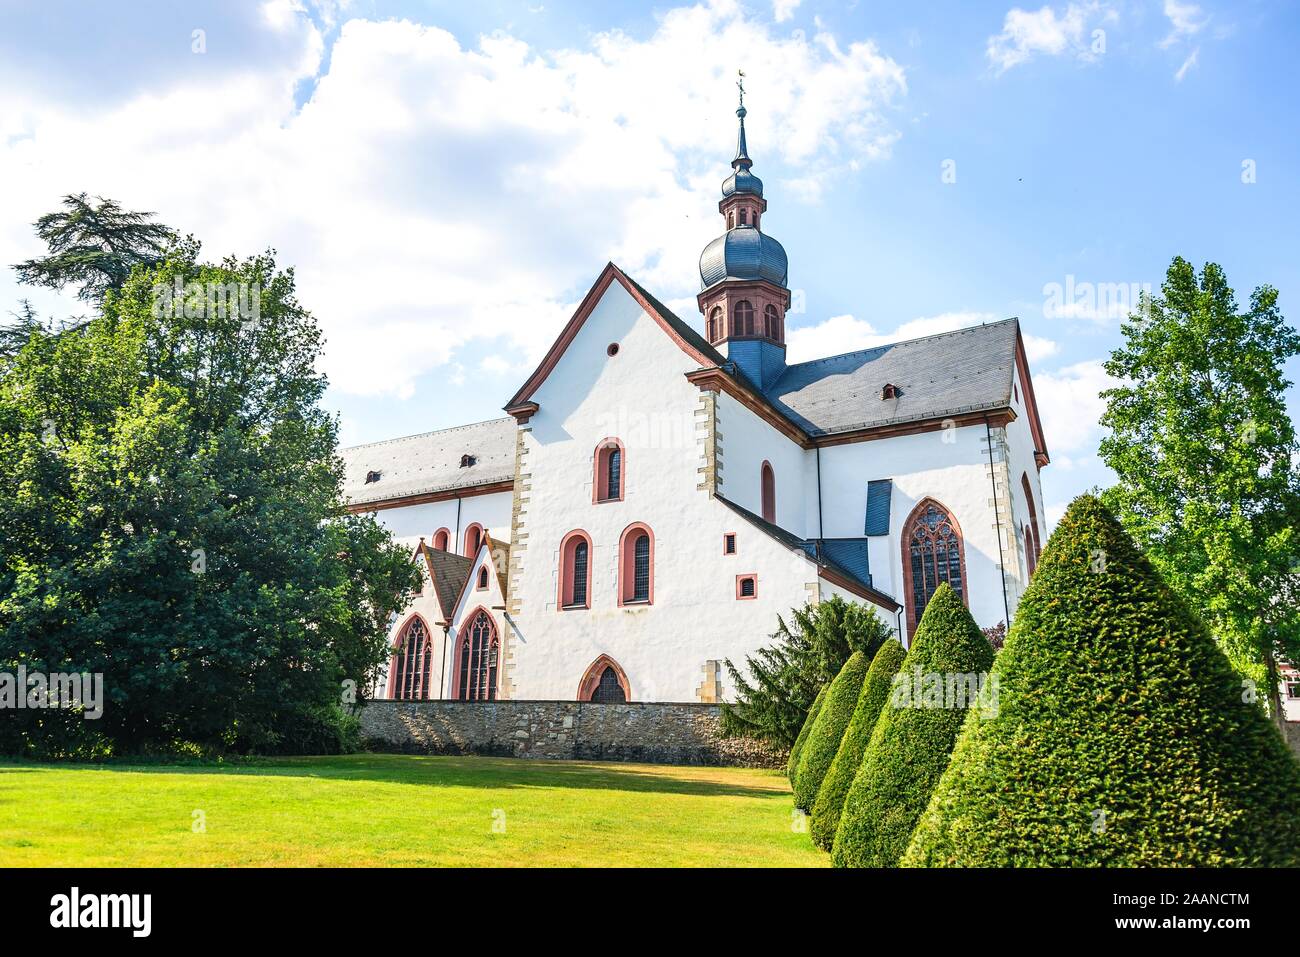 The medieval Eberbach Monastery in Rheingau, Germany Stock Photo